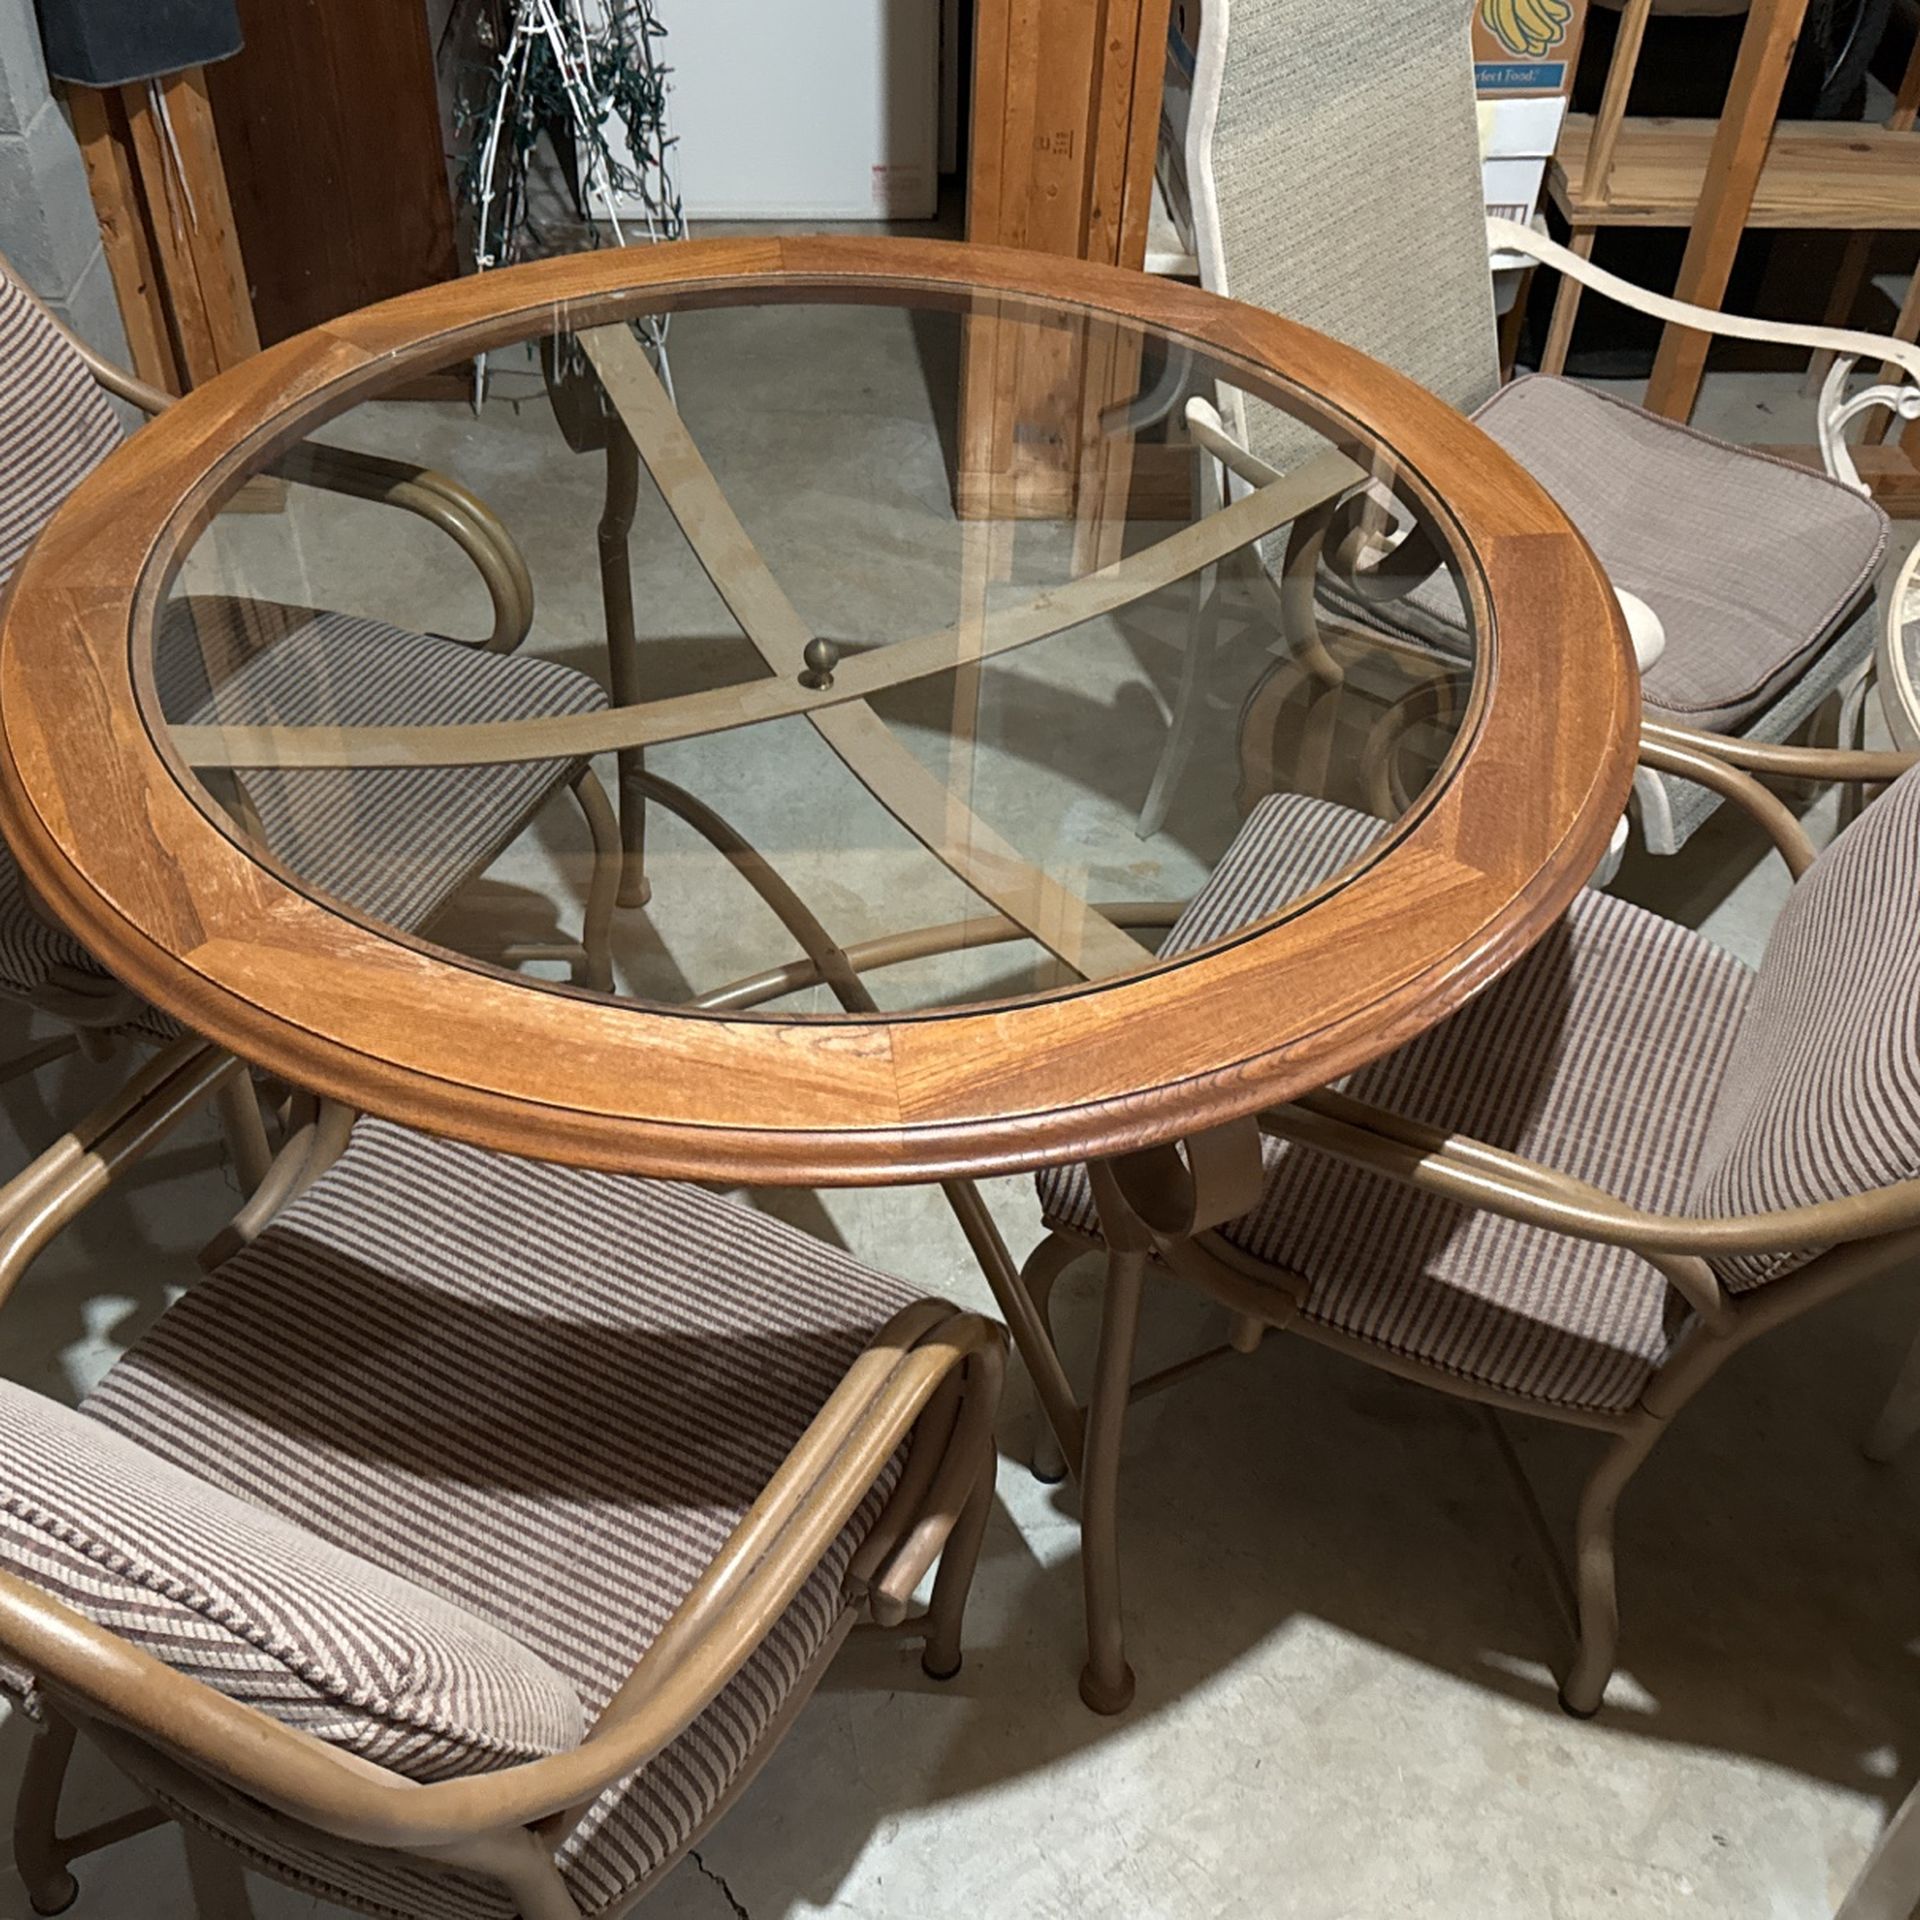 Hampton Bay Breakfast Table Glass, Metal And Wood Table W/ 4 Chairs